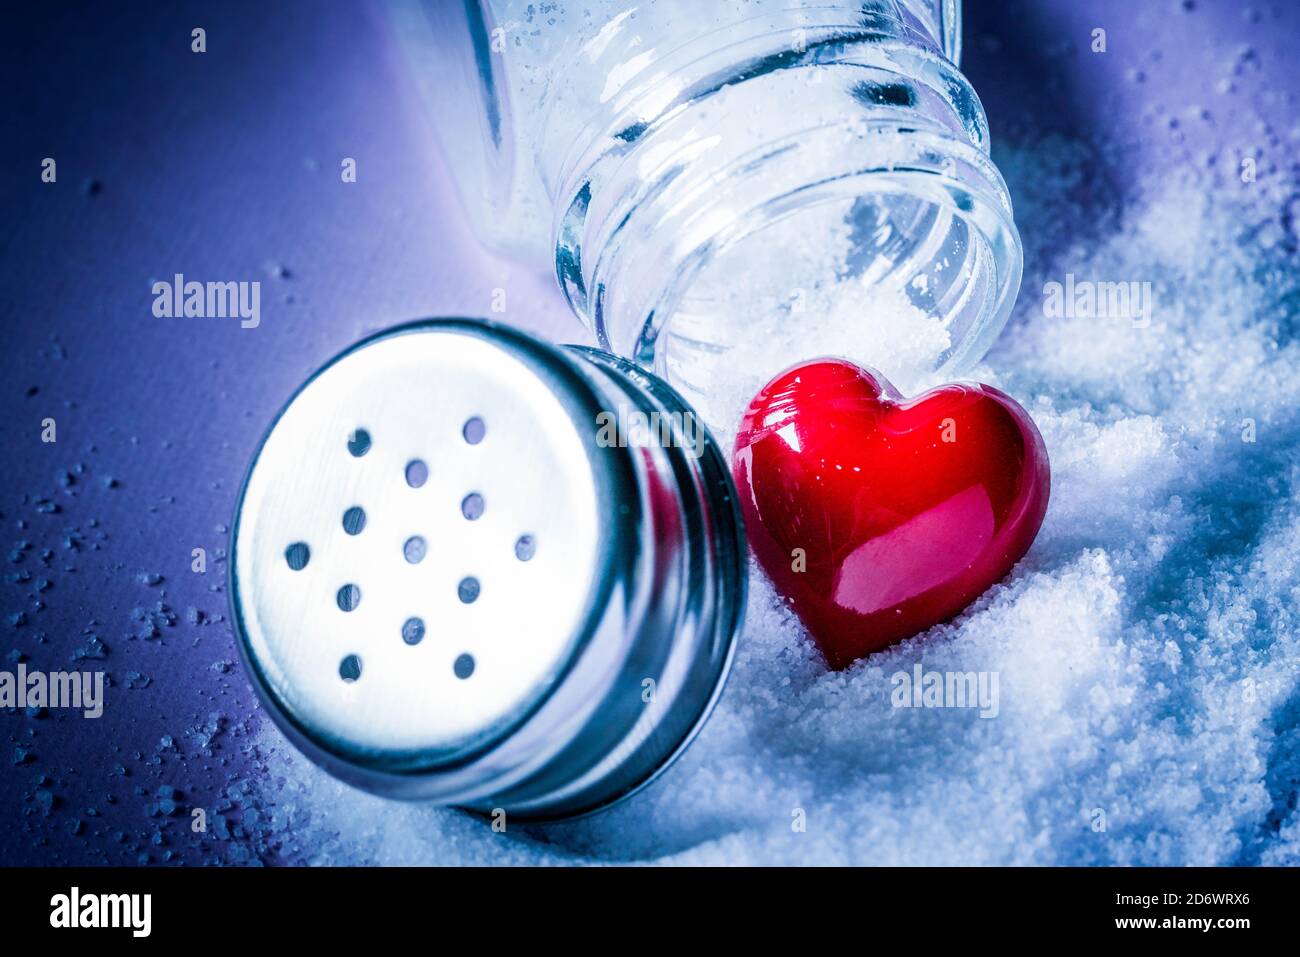 Conceptual image of excess salt. Stock Photo